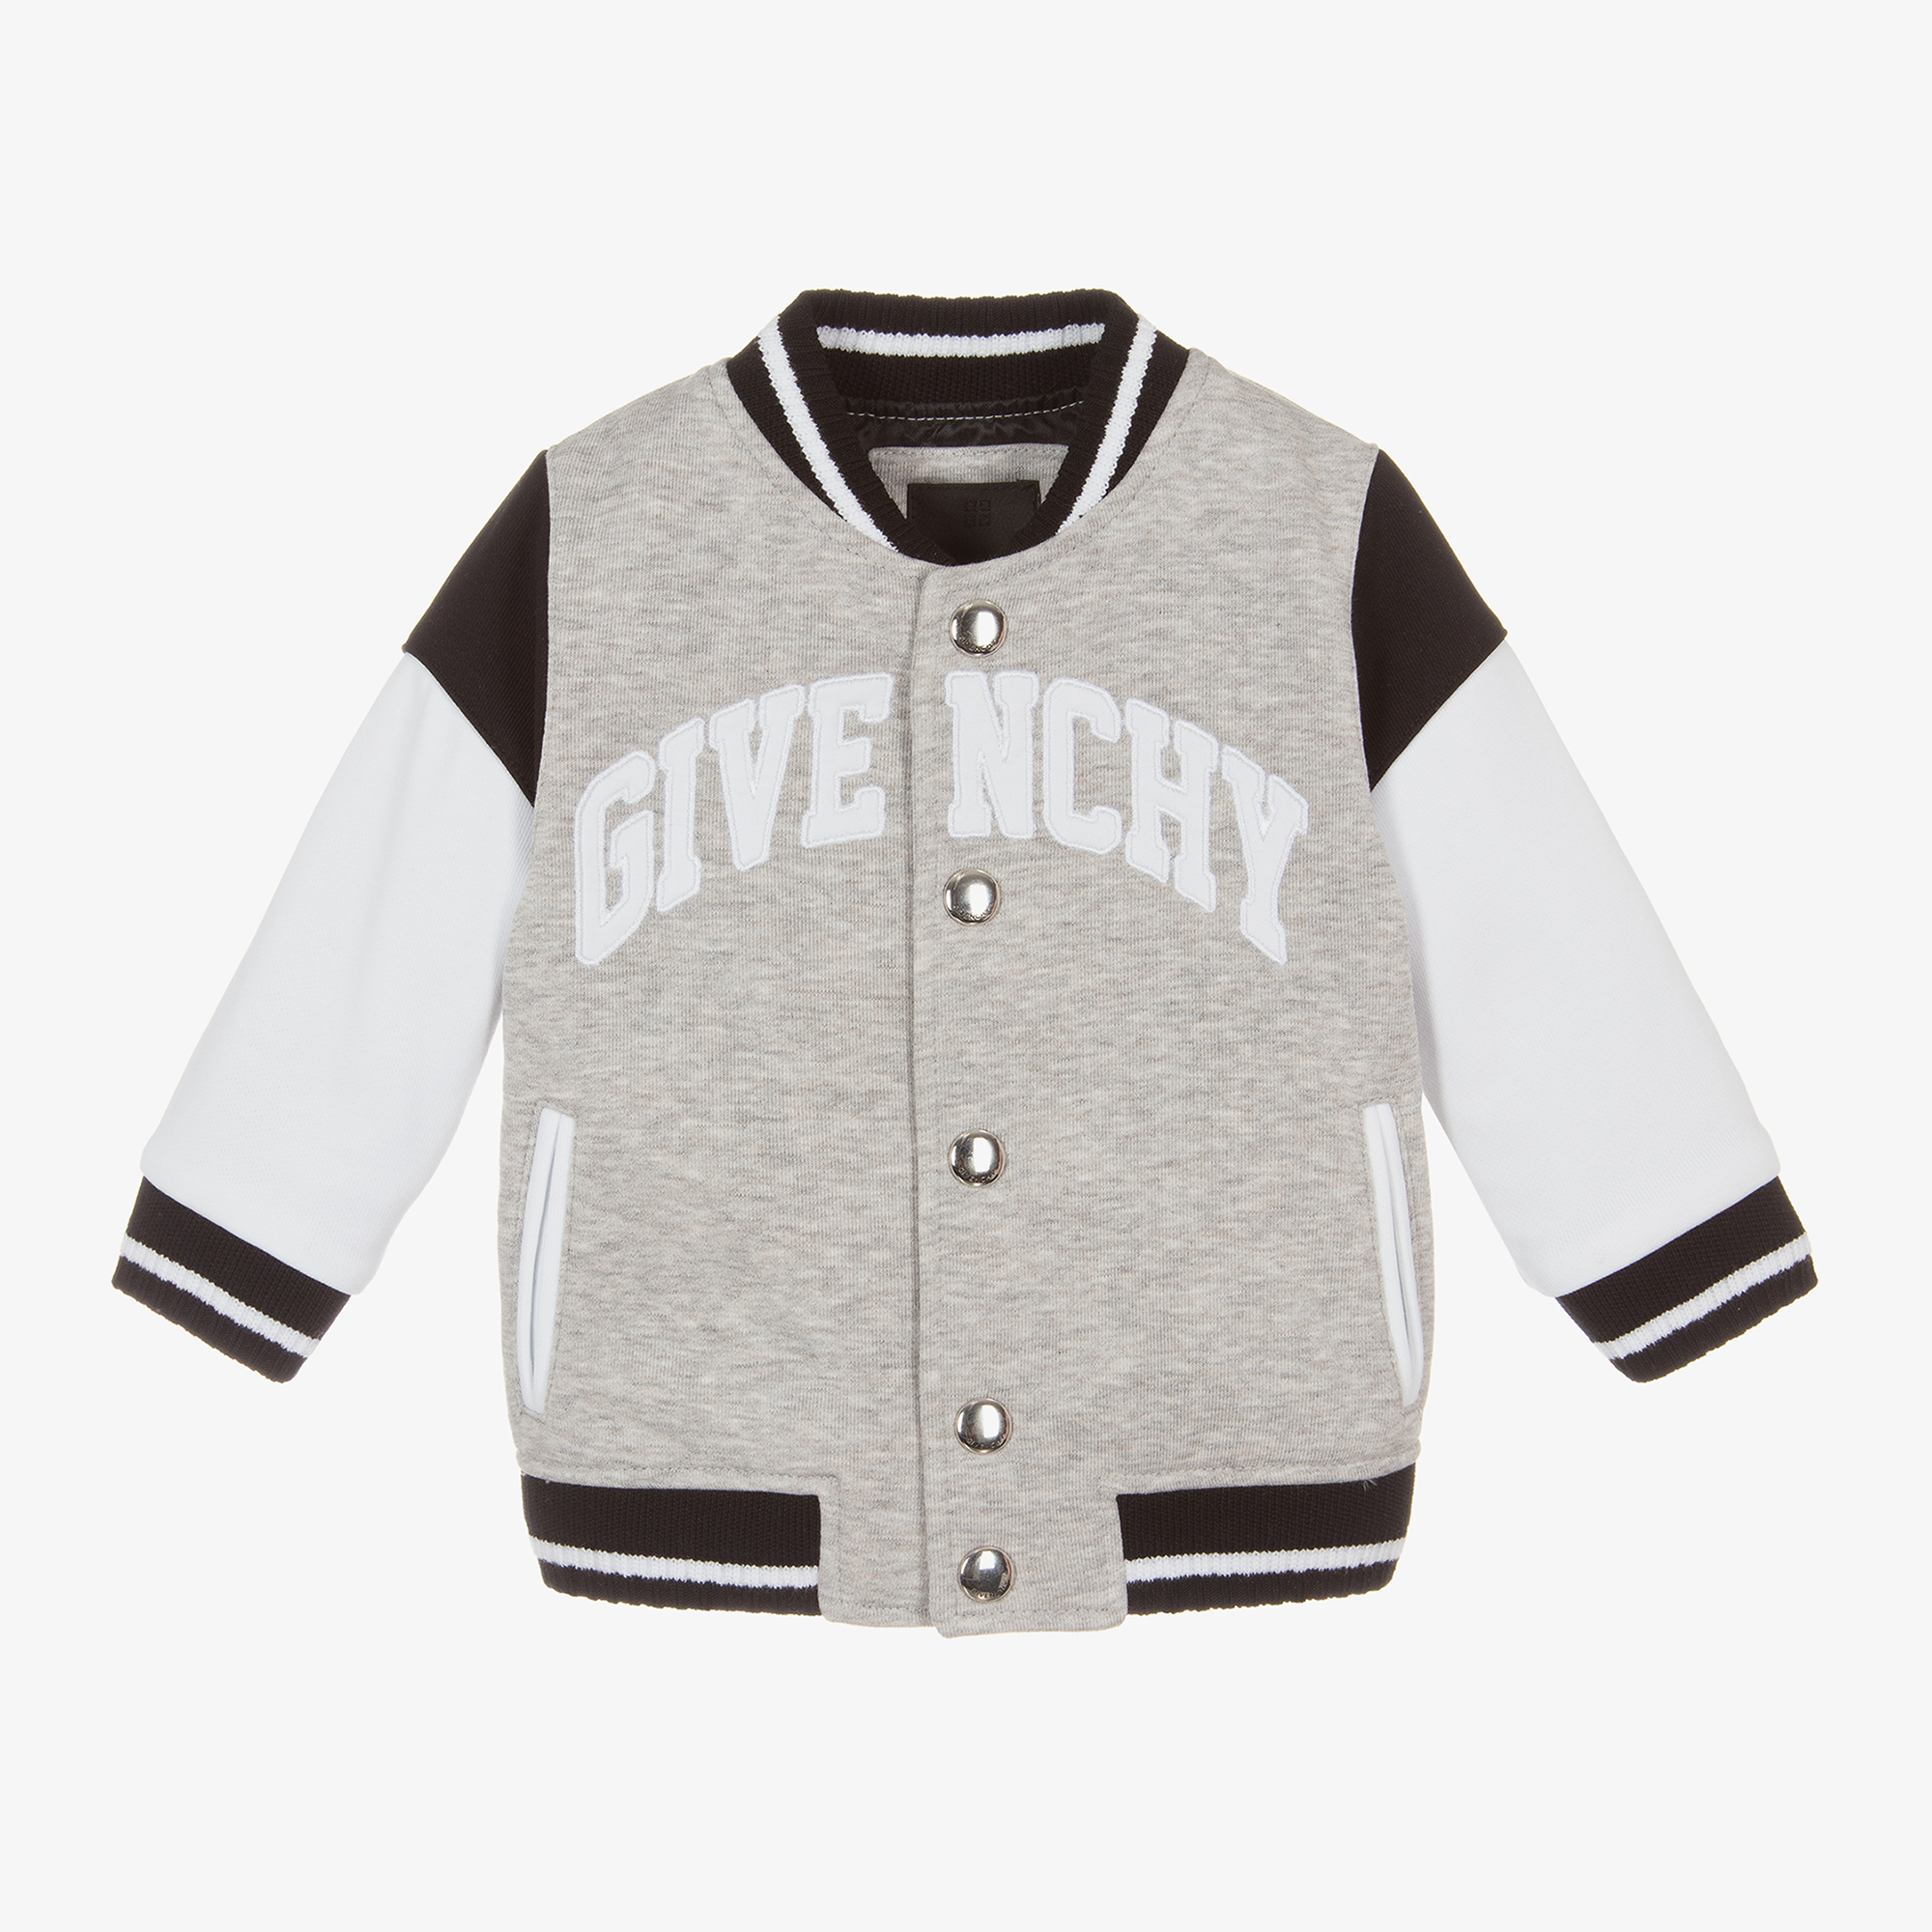 Givenchy Boys Grey Cotton Bomber Jacket